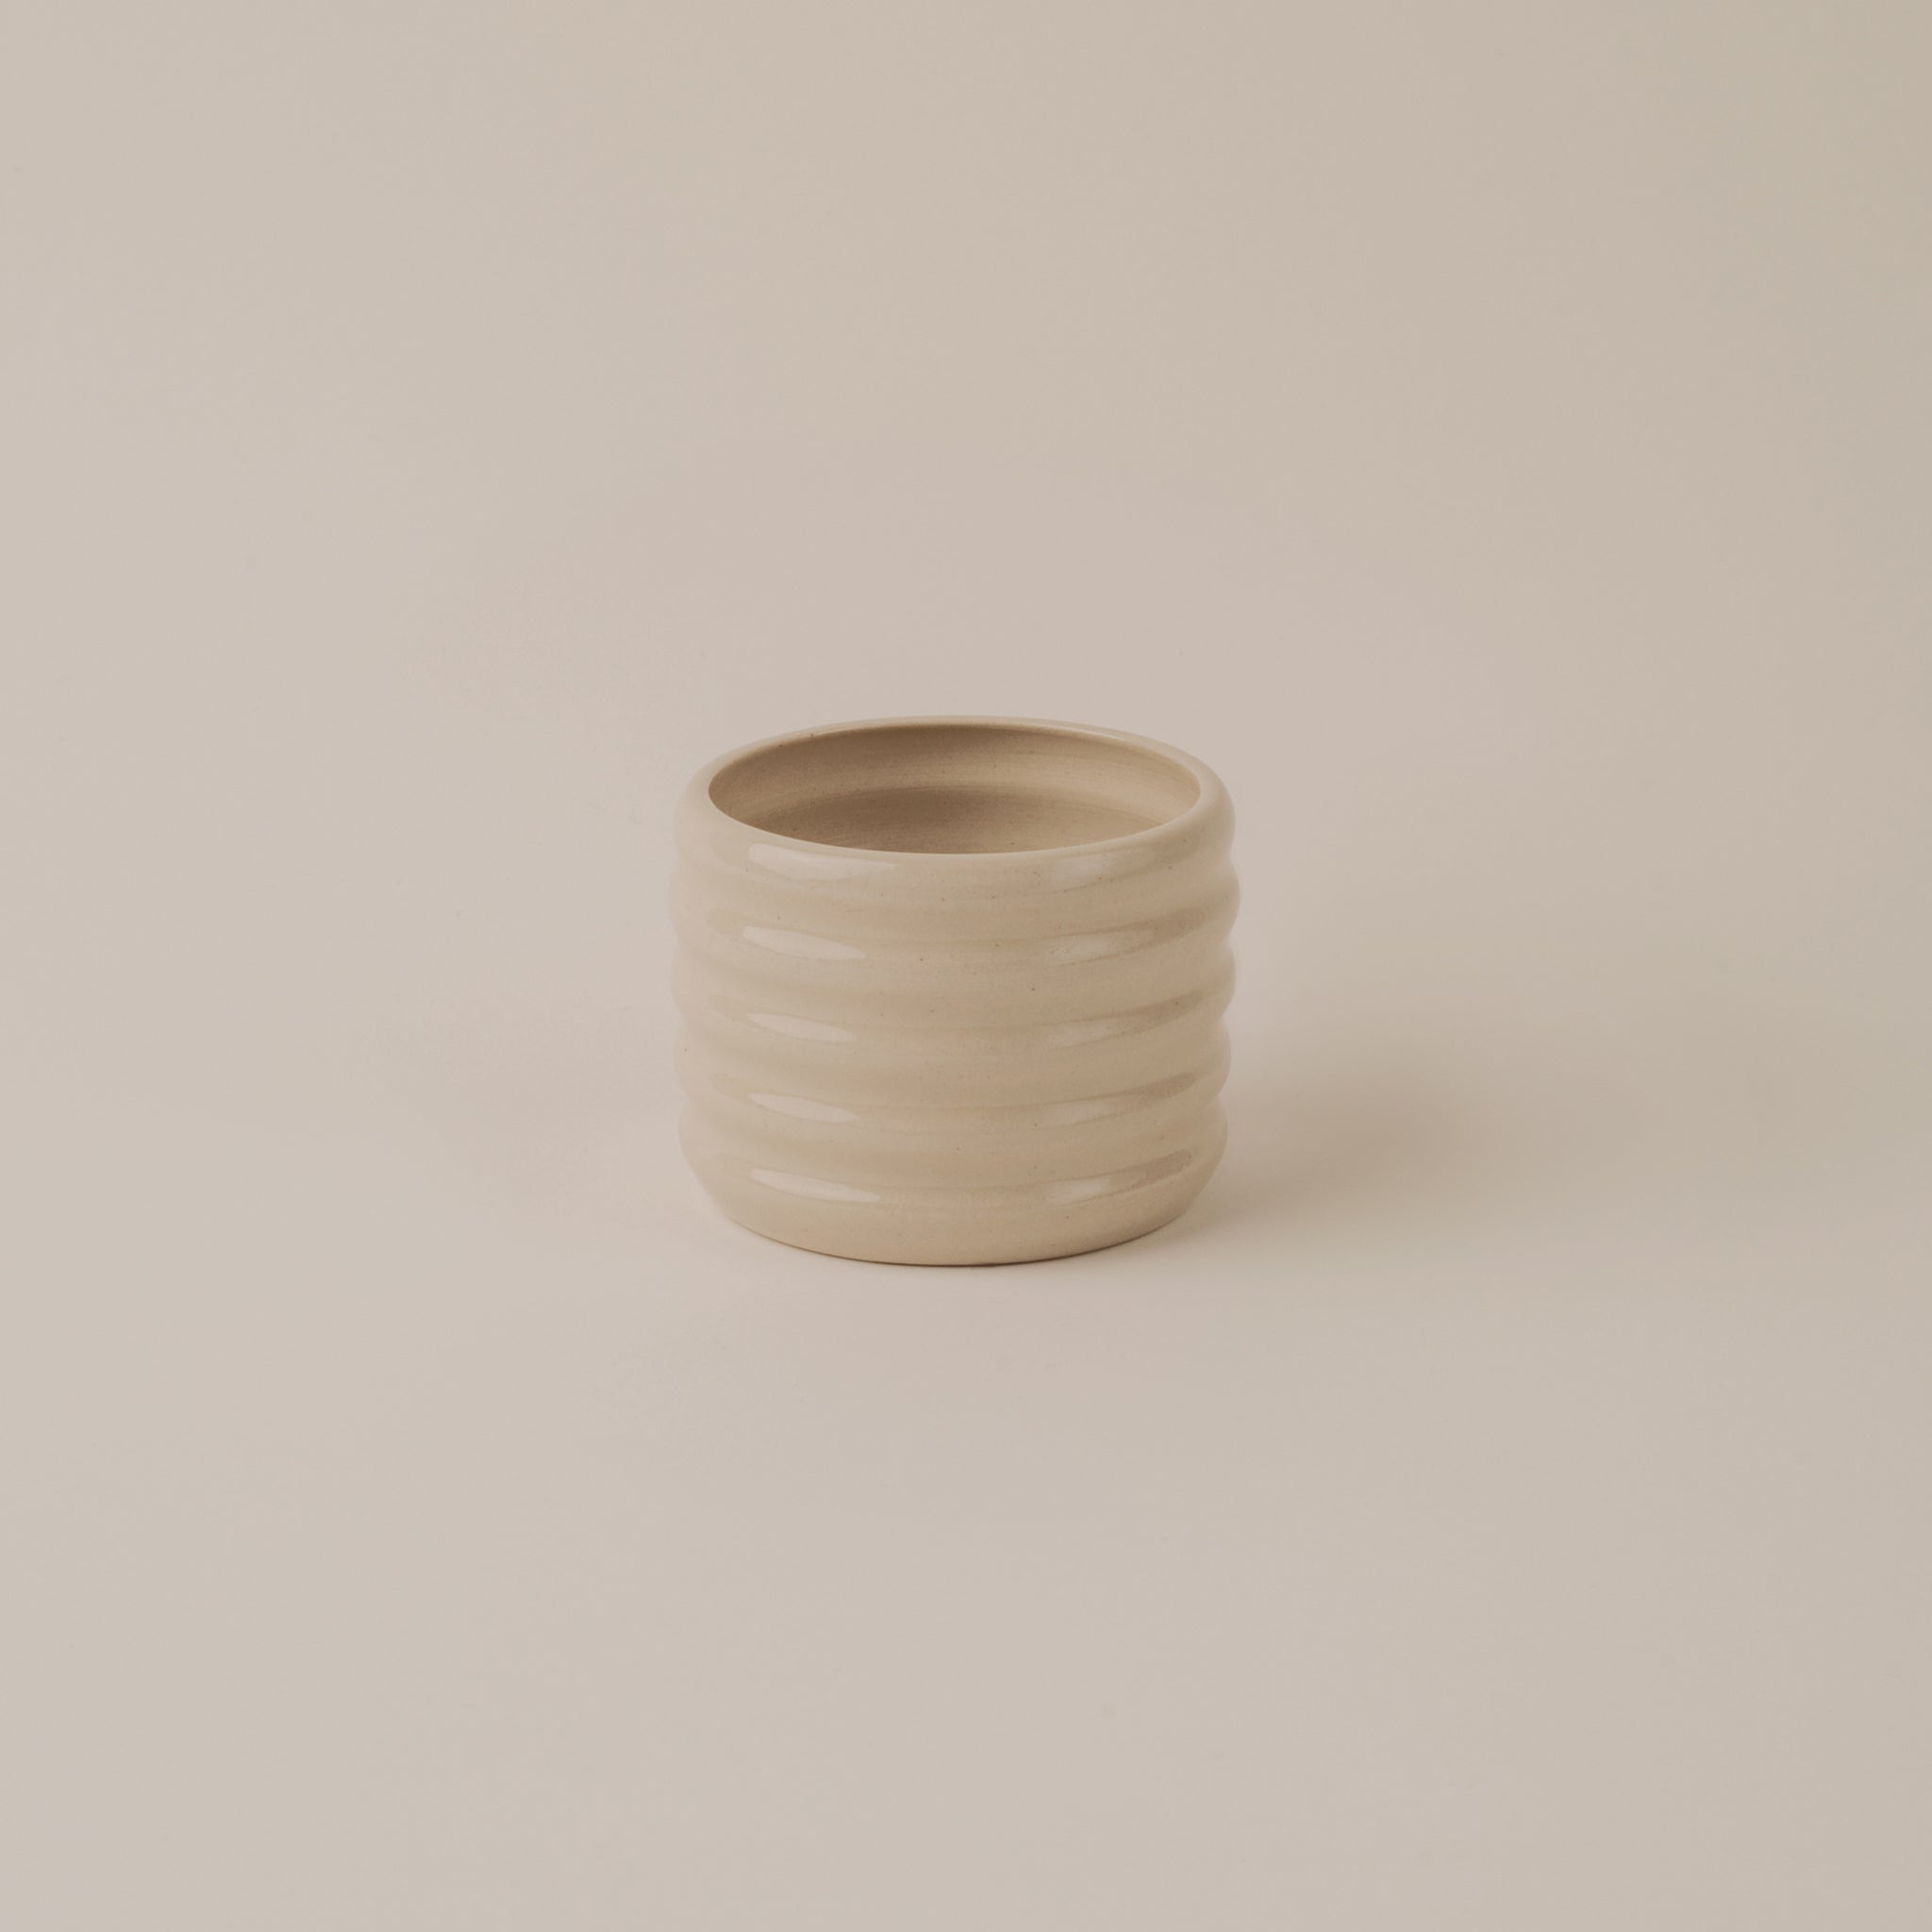 glossy espresso Cup handmade ceramic cup pottery studio Berlin Prenzlauer Berg Keramik handgemacht clai studio